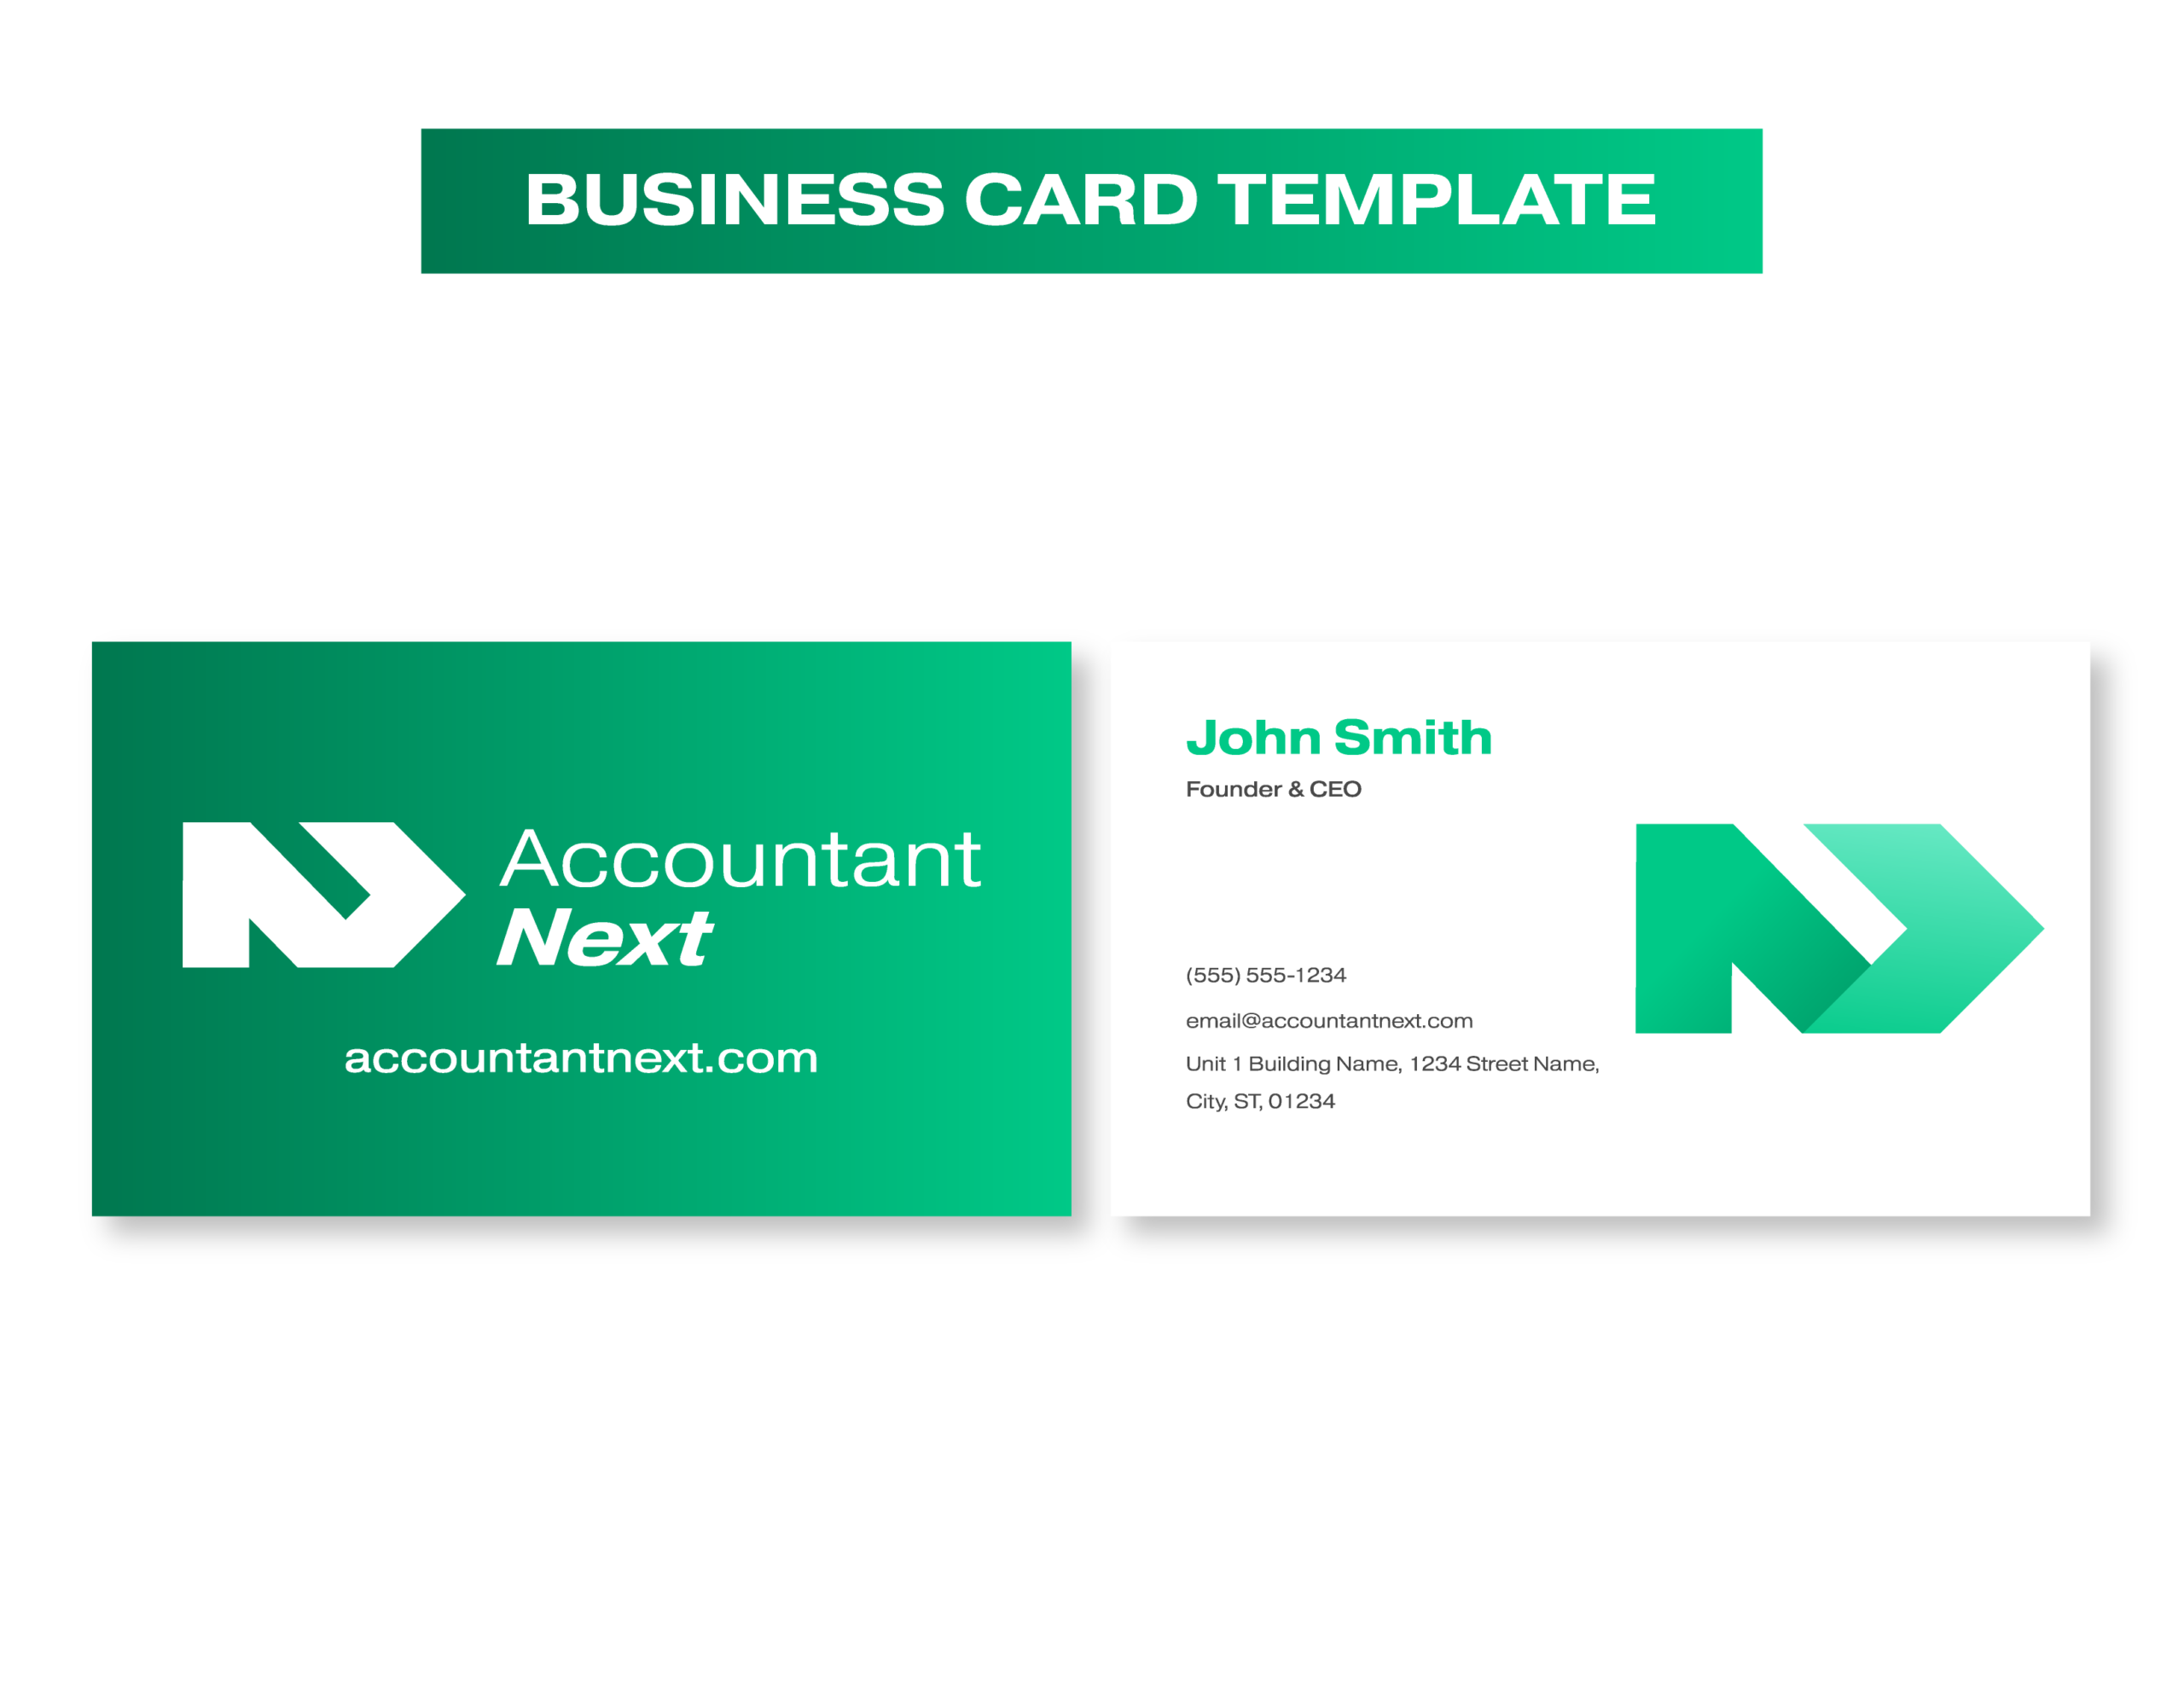 04AccountantNext_Showcase_Business Card Template